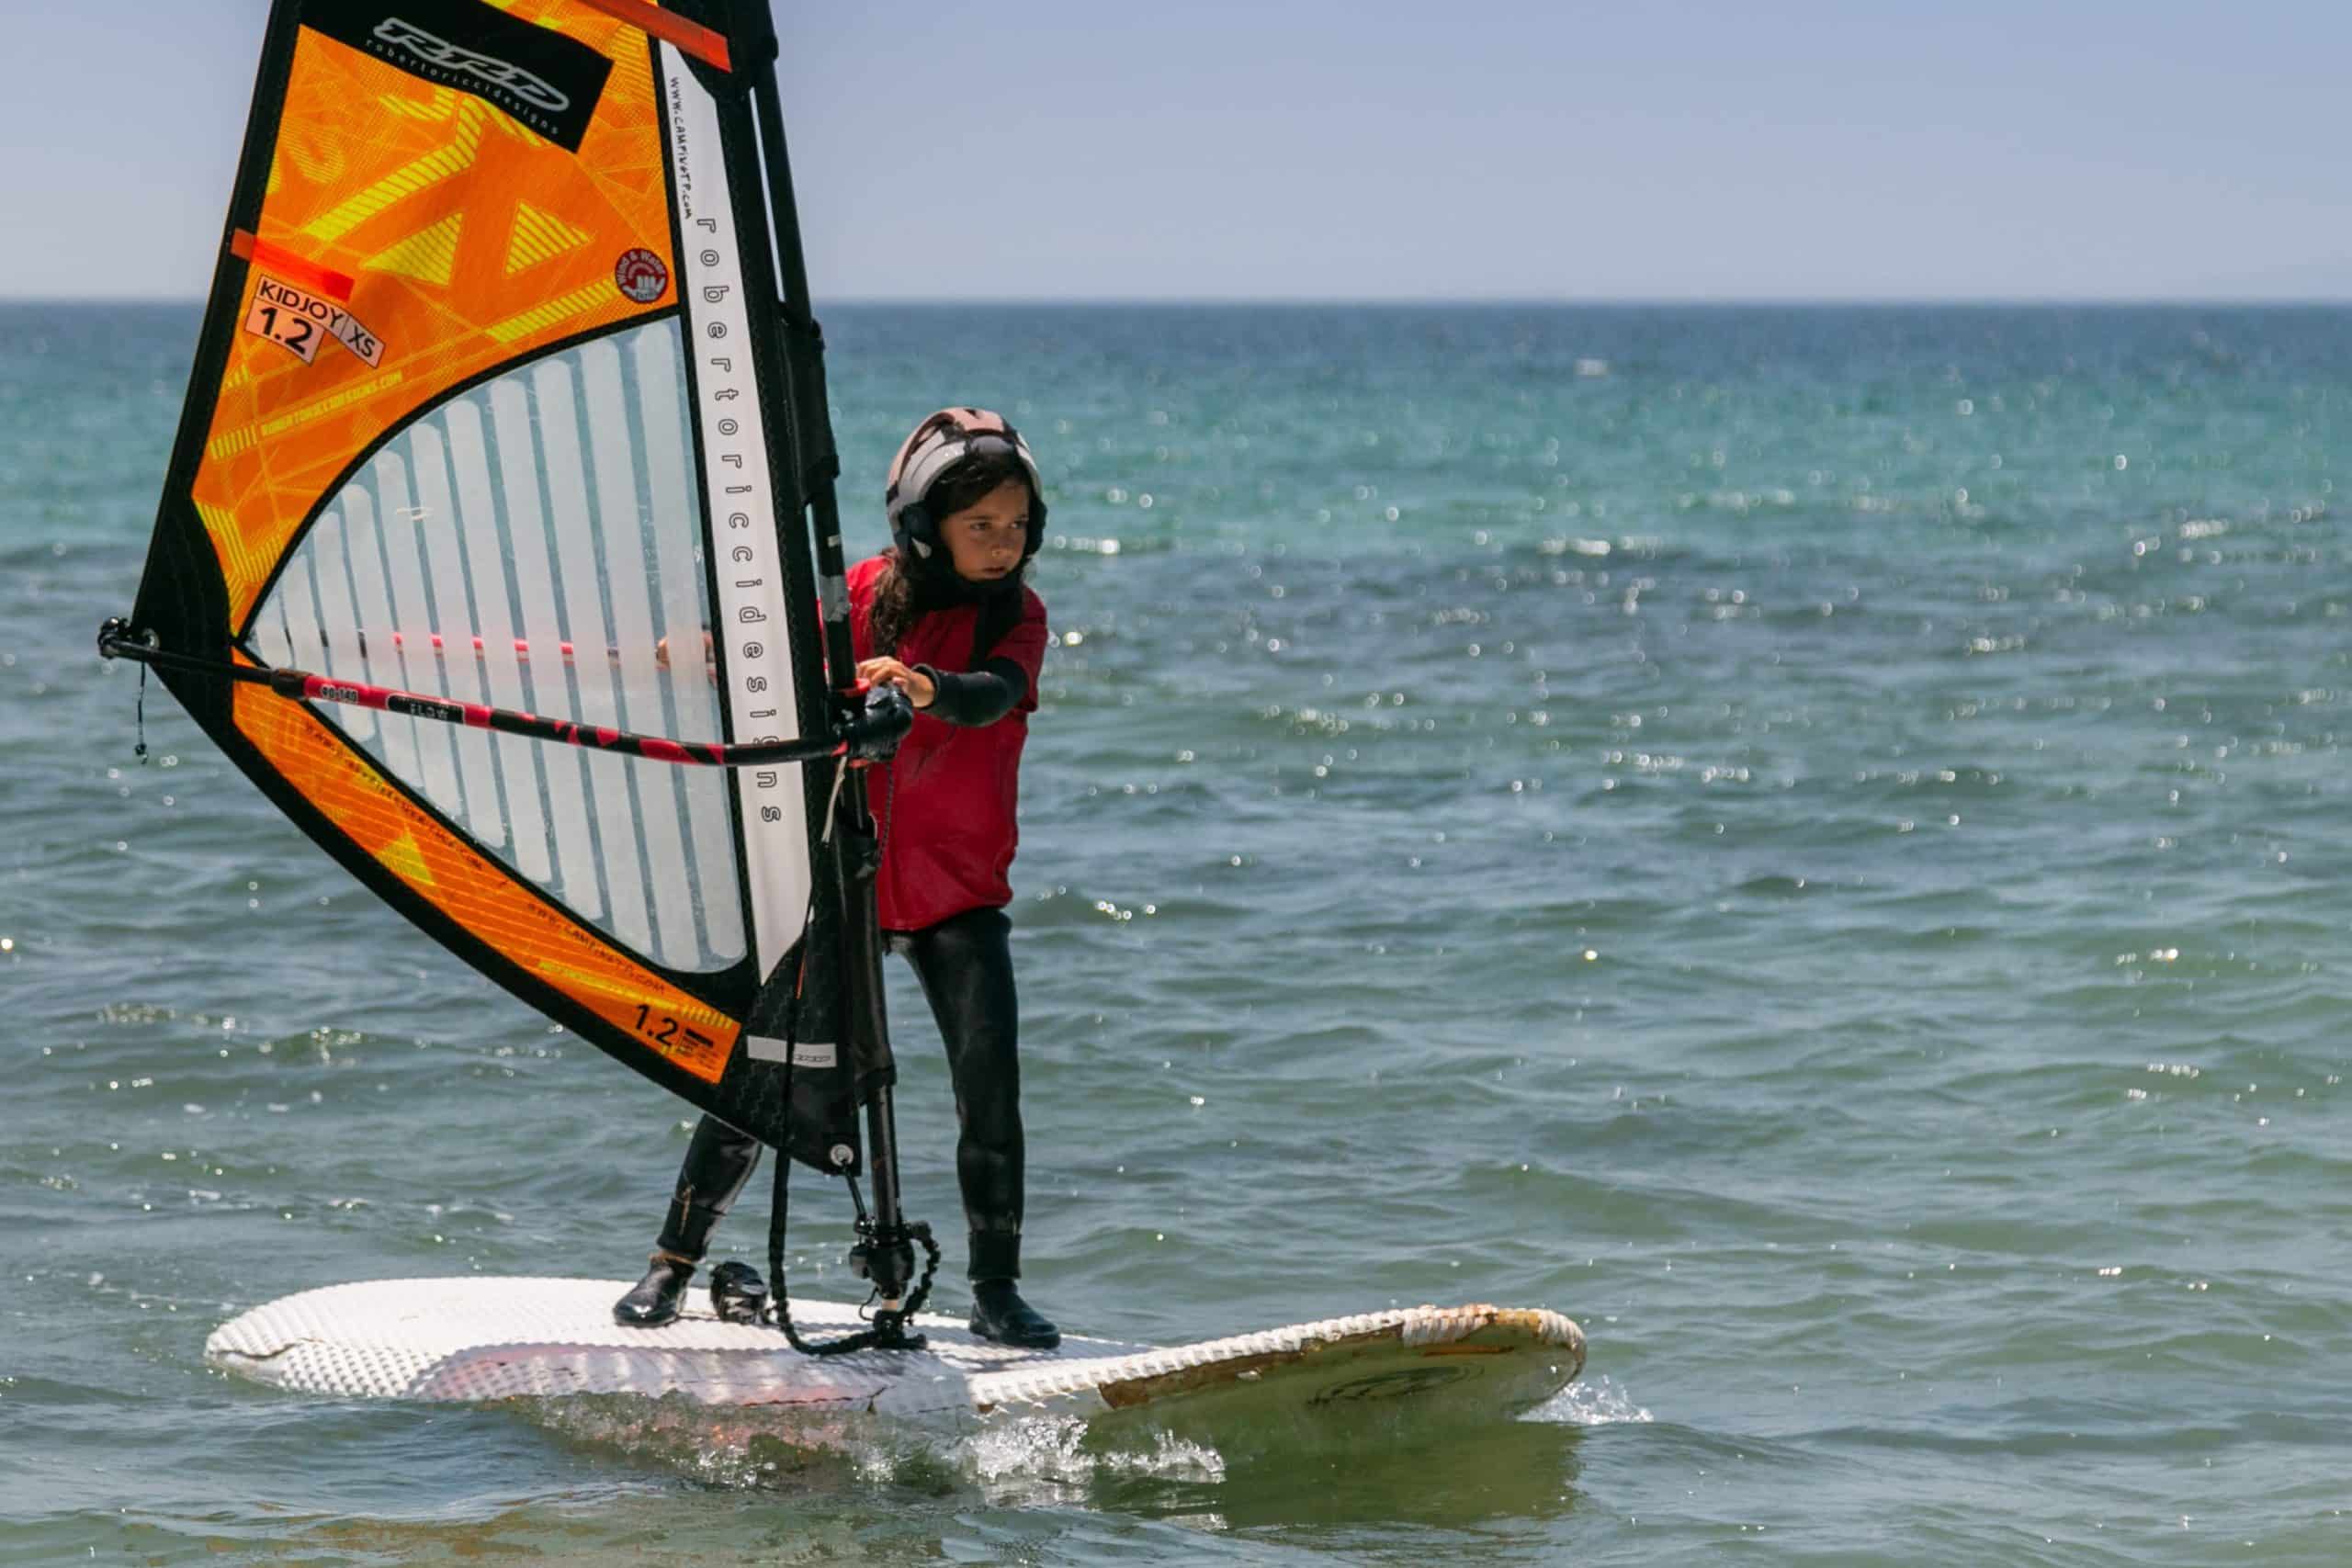 windsurfing lessons in Tarifa